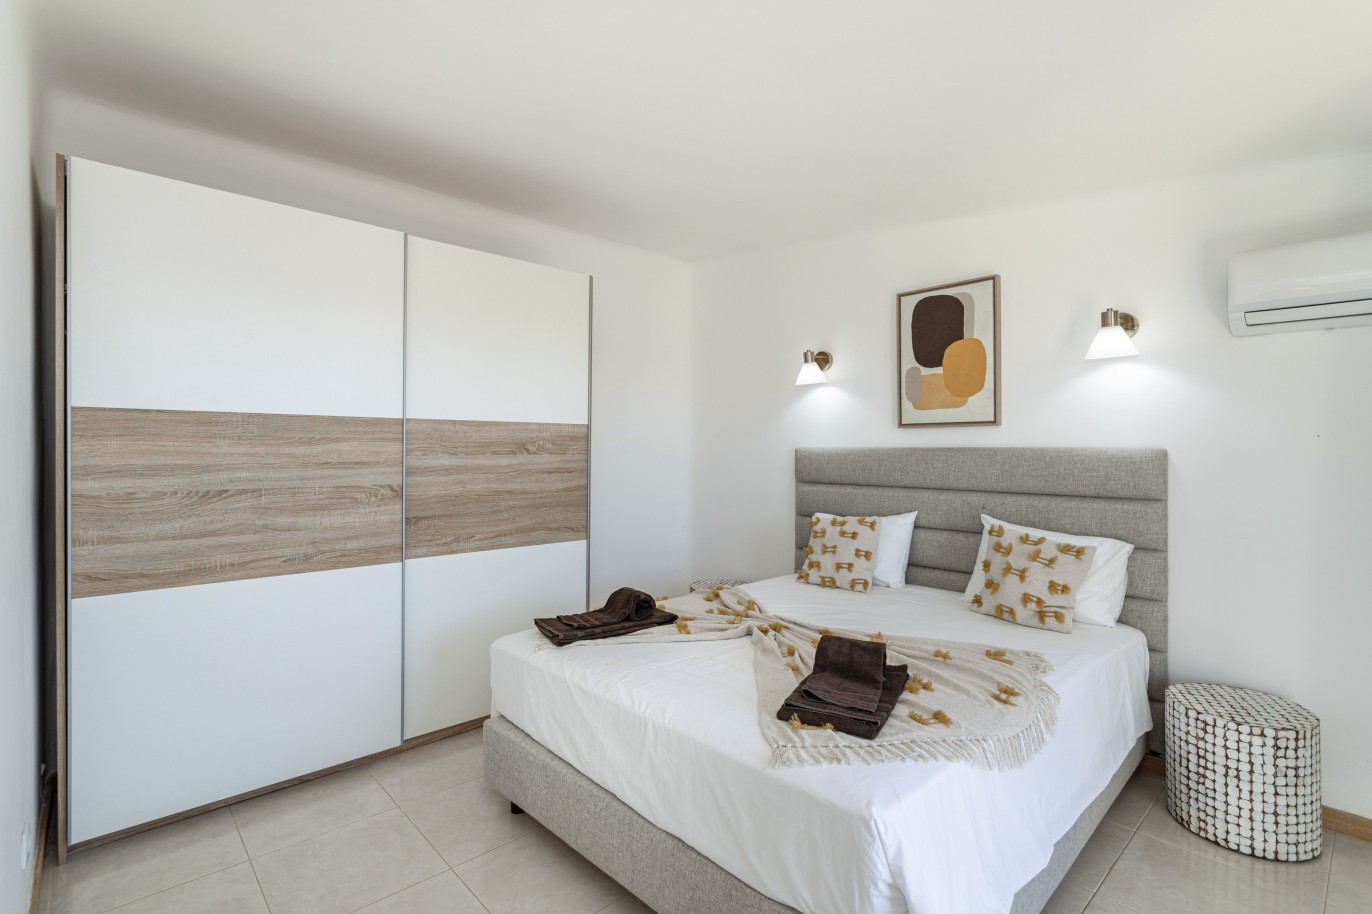 4 bedroom villa with pool, for sale in Albufeira, Algarve_233597